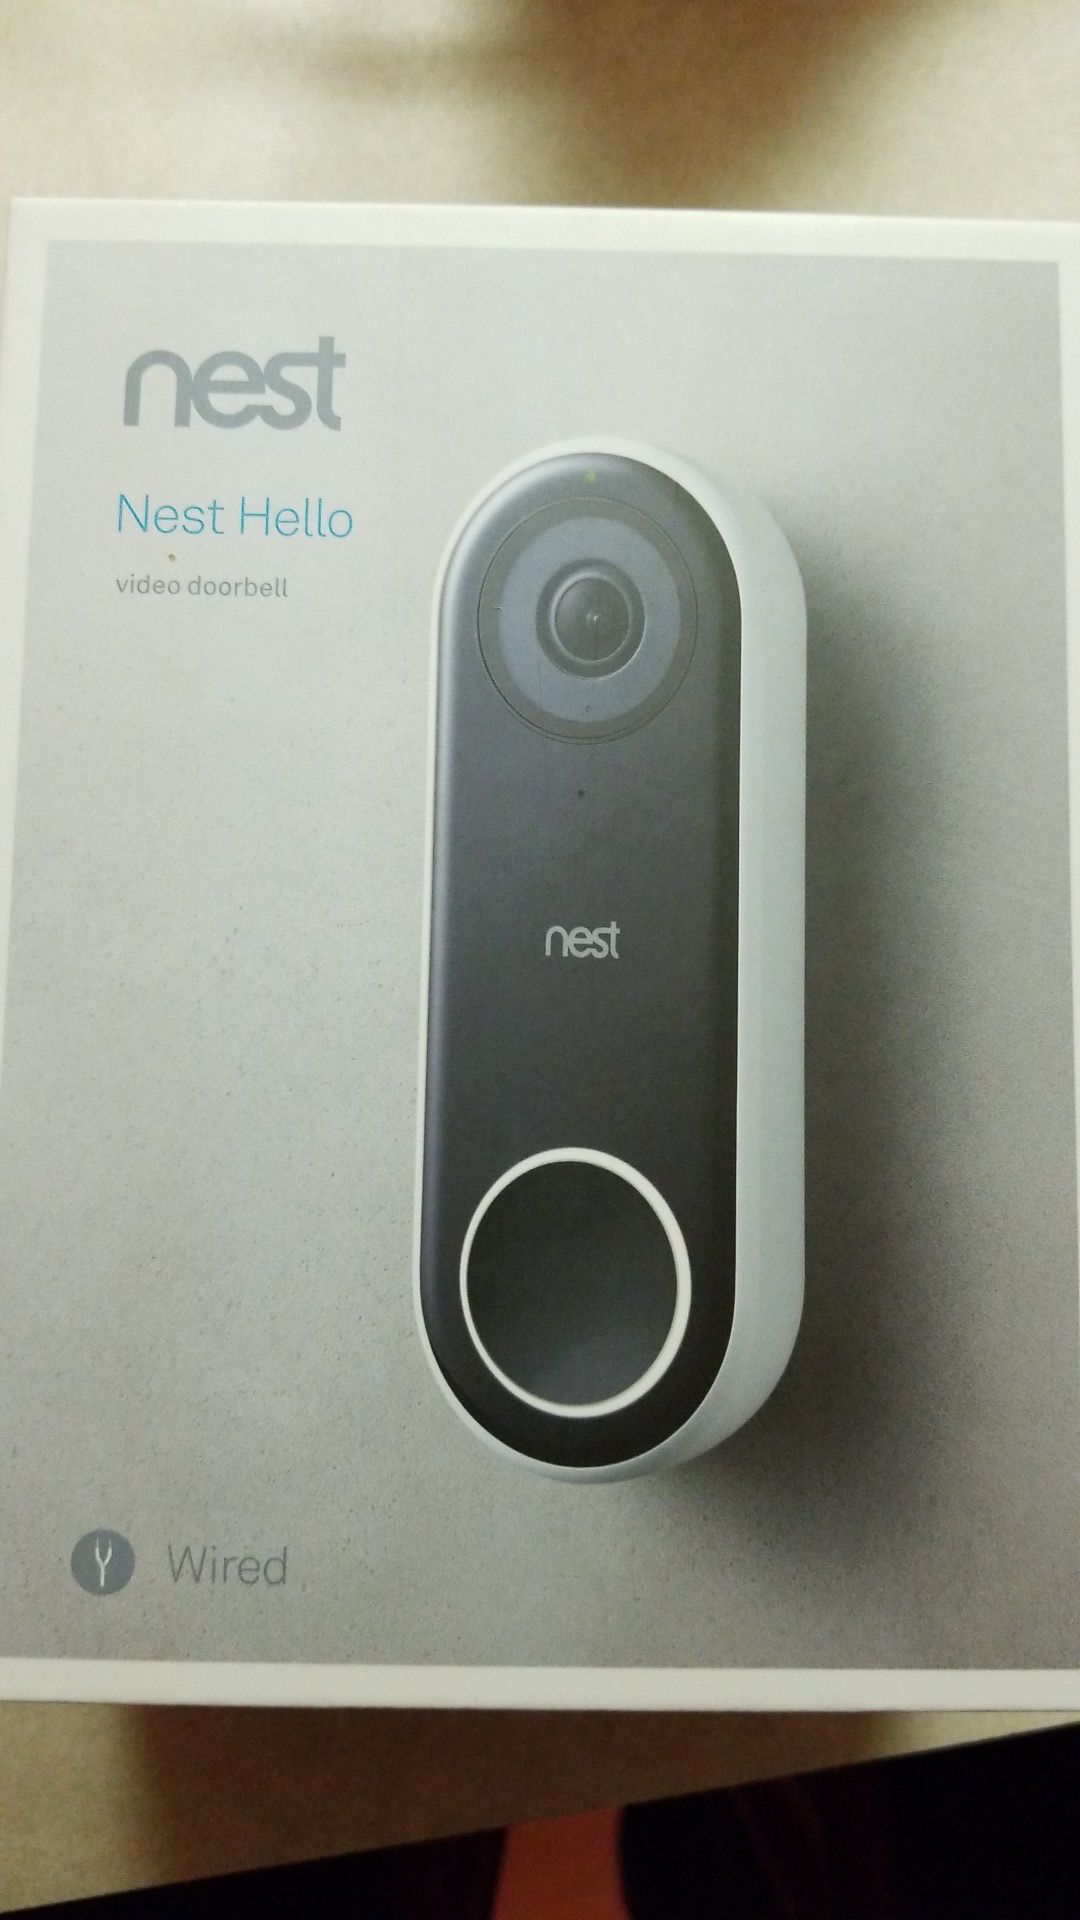 Nest wired video doorbell